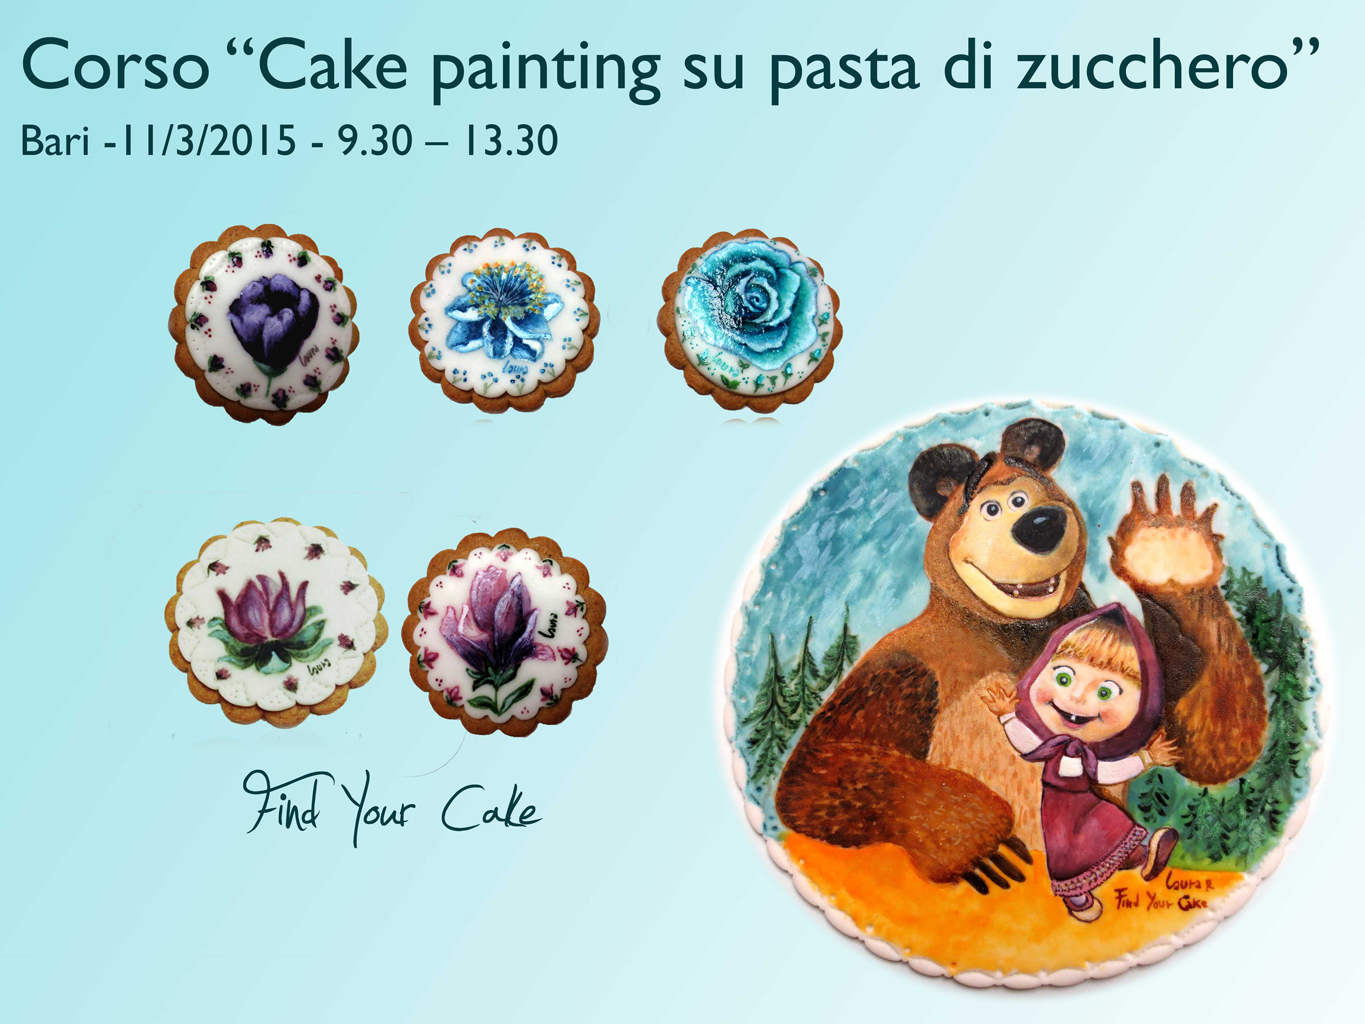 Corso “Cake painting su pasta di zucchero”